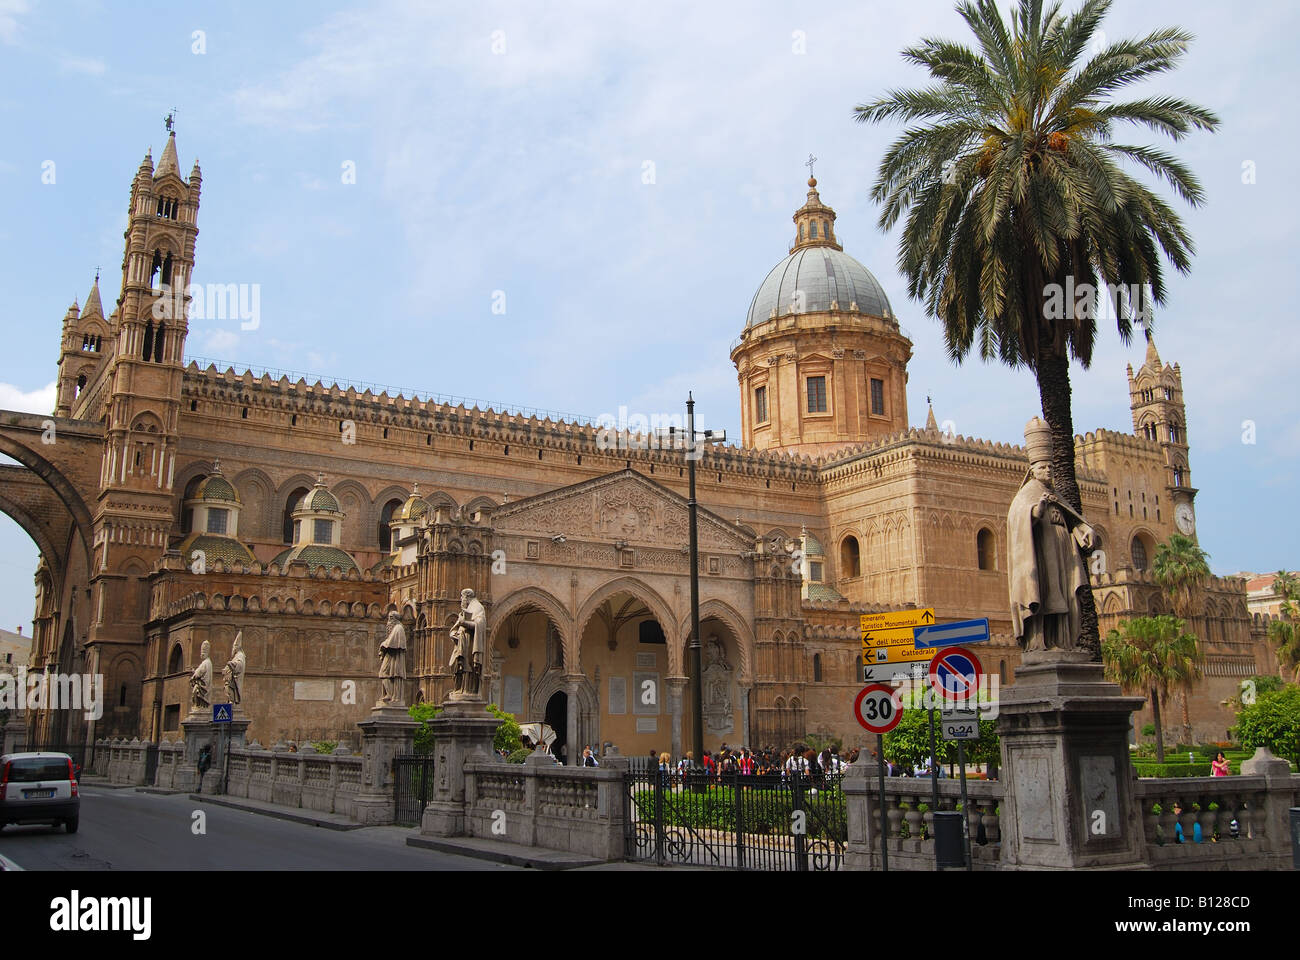 Palermo Cathedral, Corso Vittorio Emanuele, Palermo, Palermo Province, Sicily, Italy Stock Photo